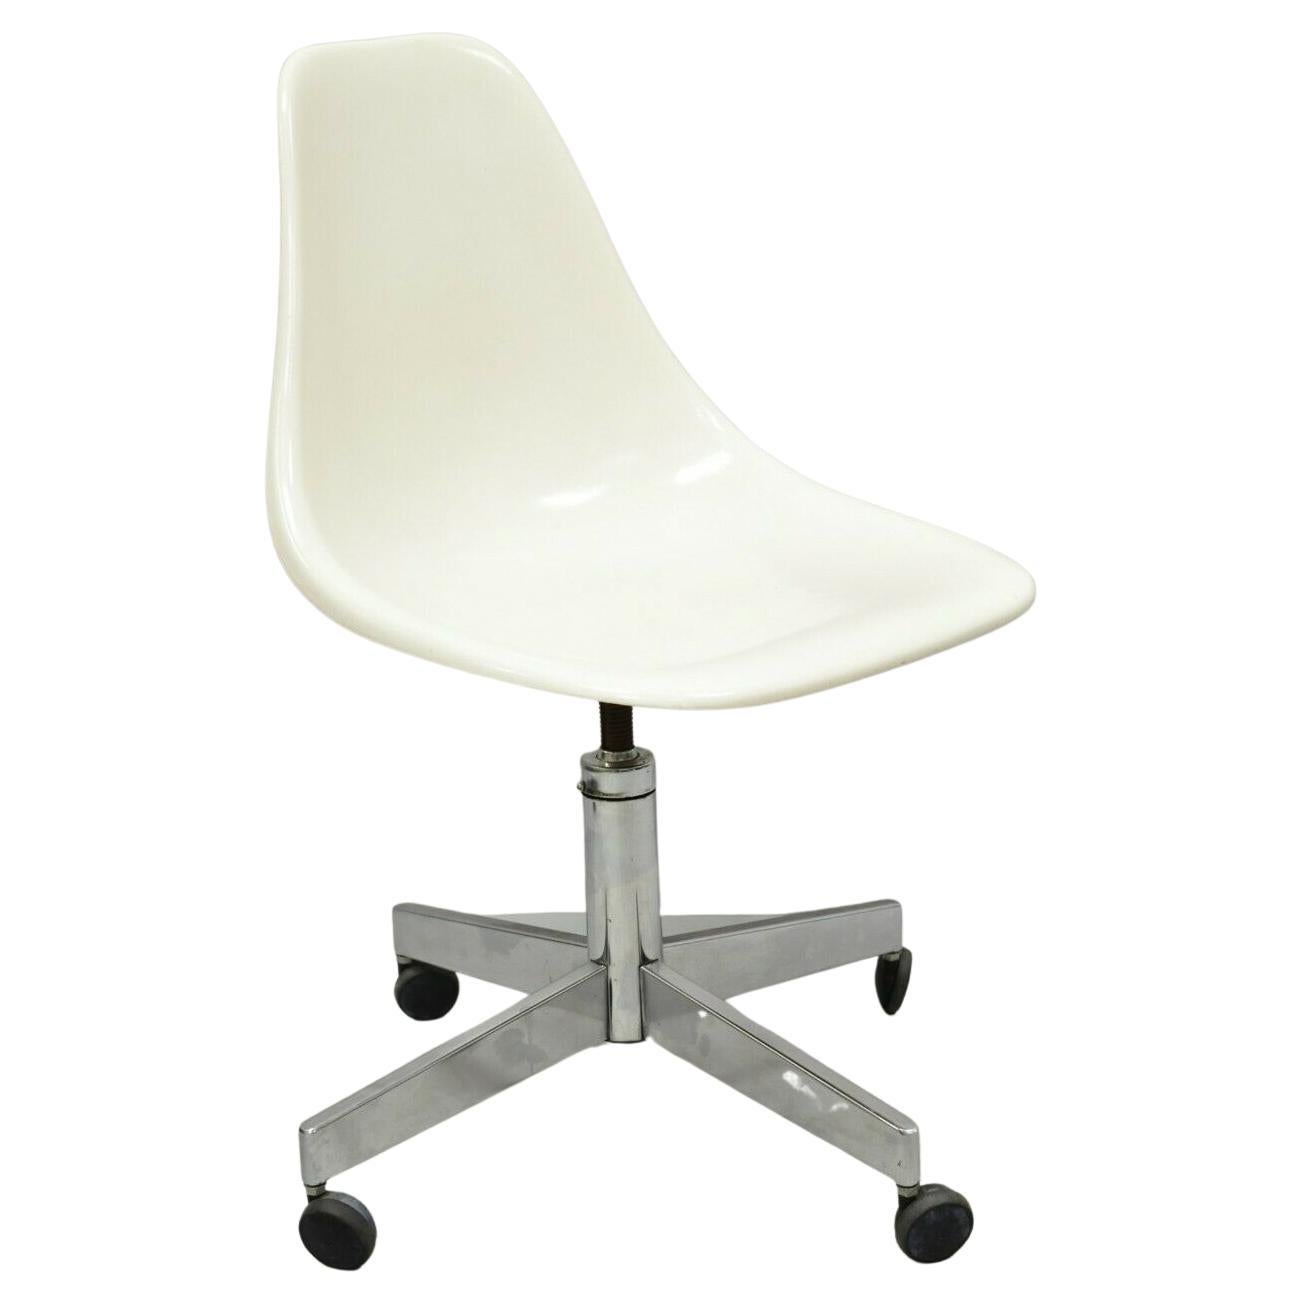 Vintage Mid Century Modern White Fiberglass Shell Rolling Adjustable Desk Chair For Sale